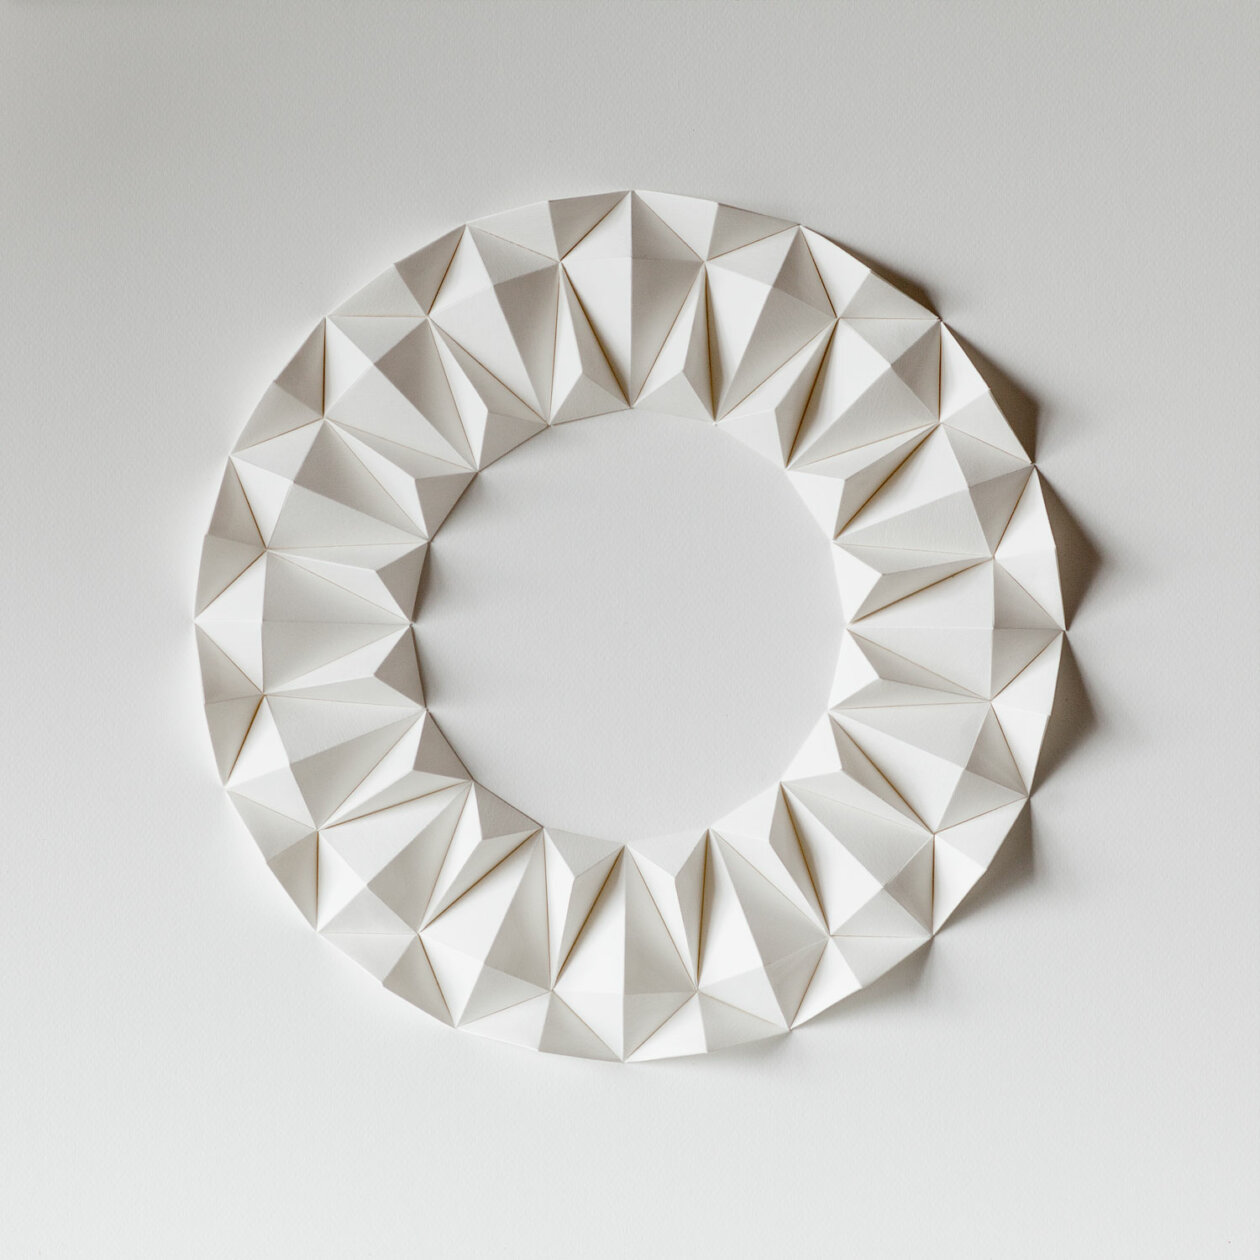 Origami-inspired geometric paper sculptures by Anna Kruhelska